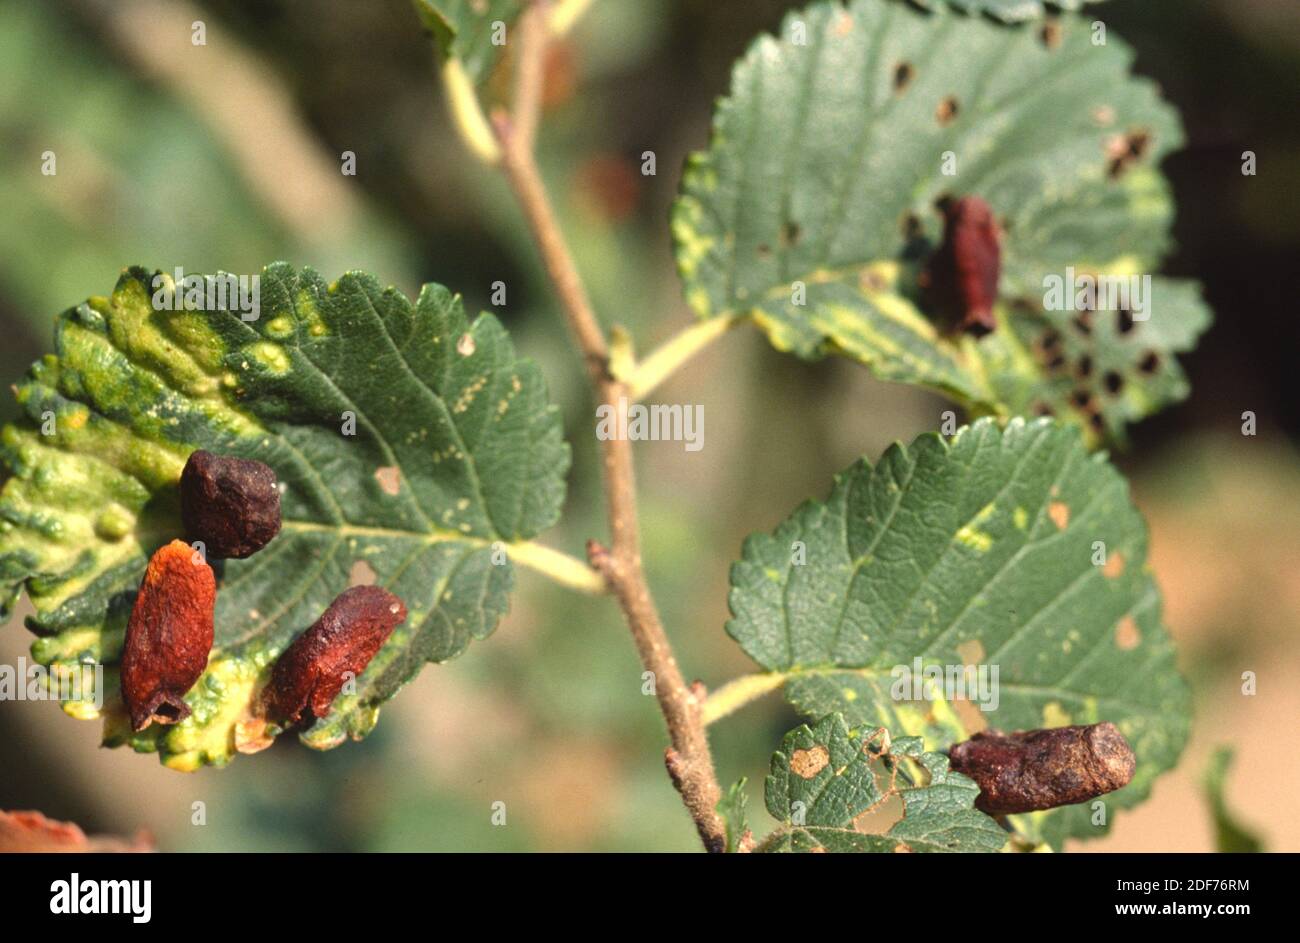 Elm sack gall produced by aphid Tetraneura ulmi on elm leaves. Stock Photo